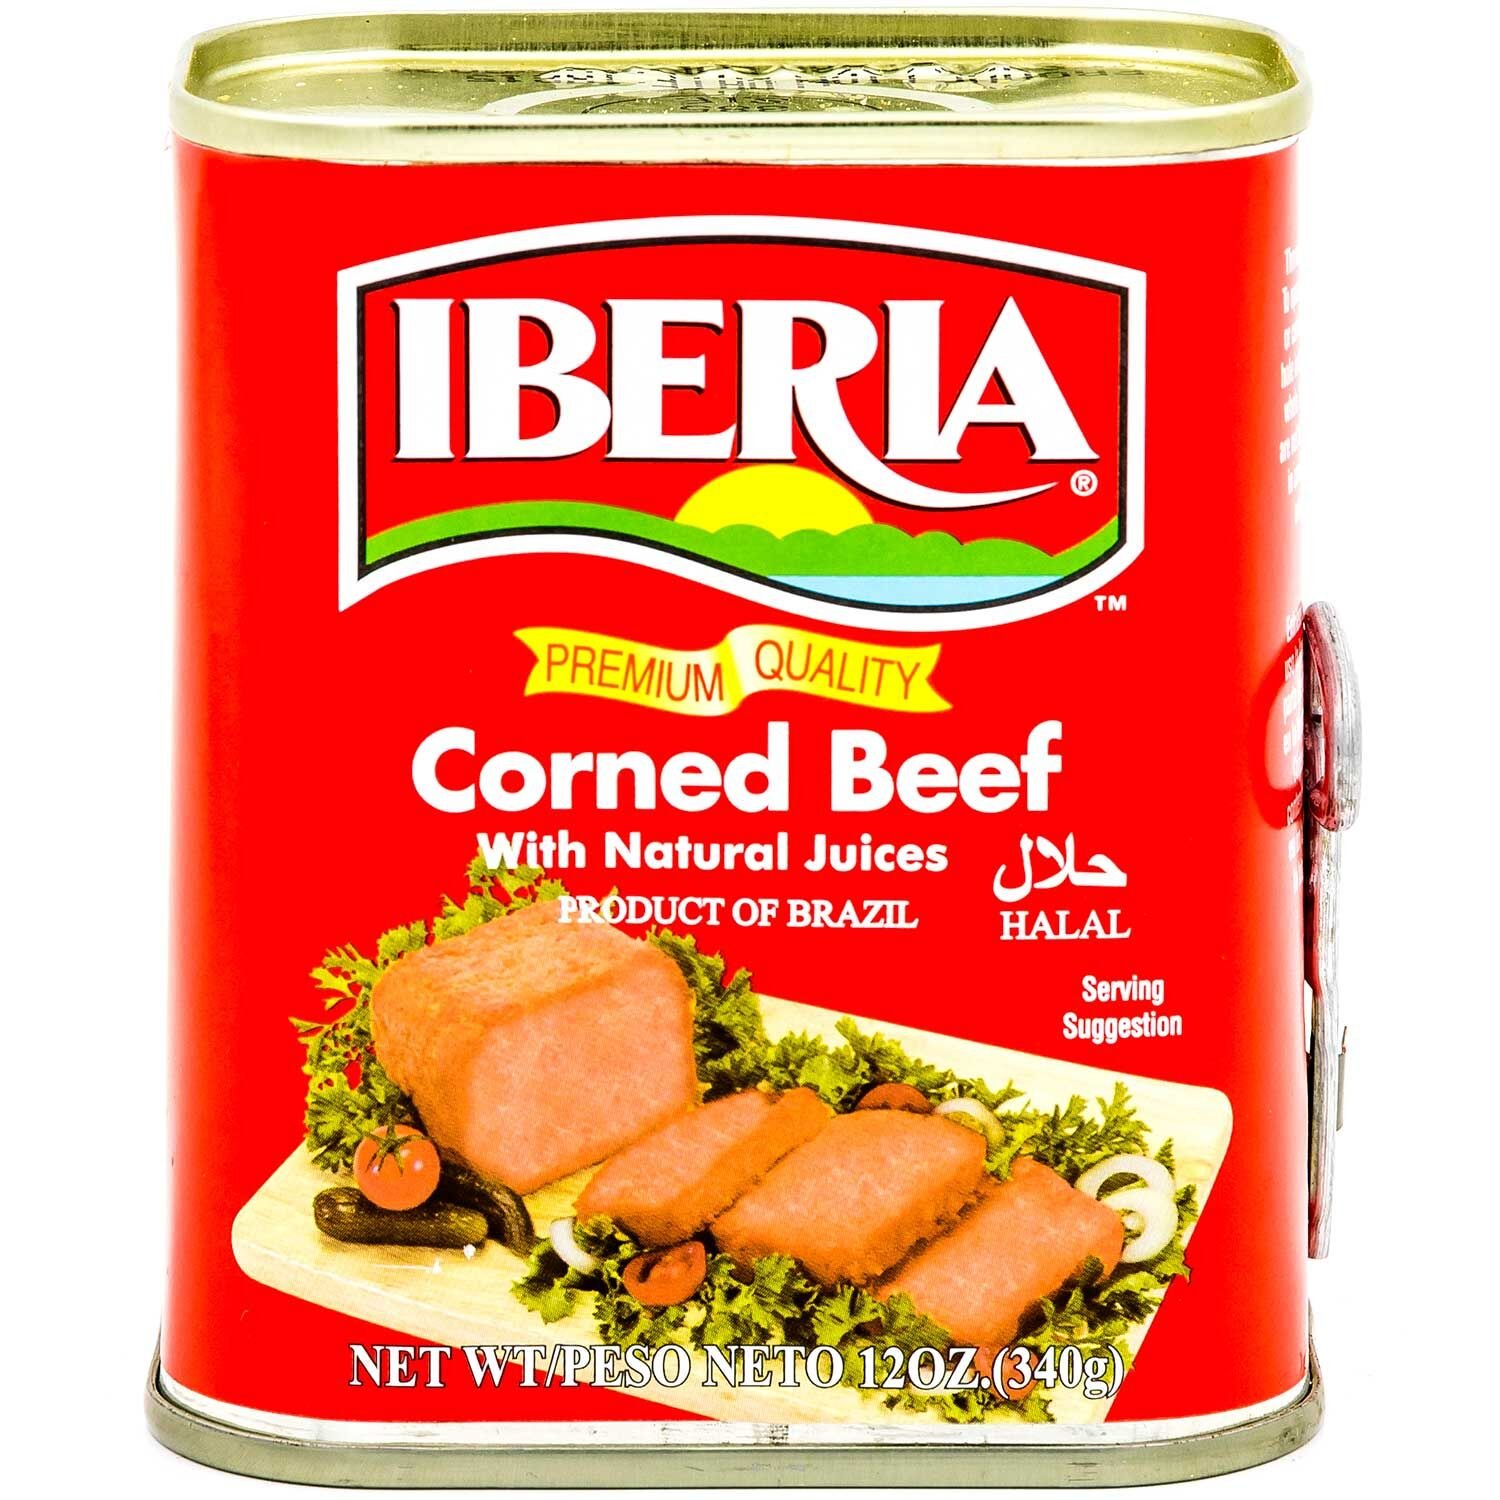 Iberia Corned Beef